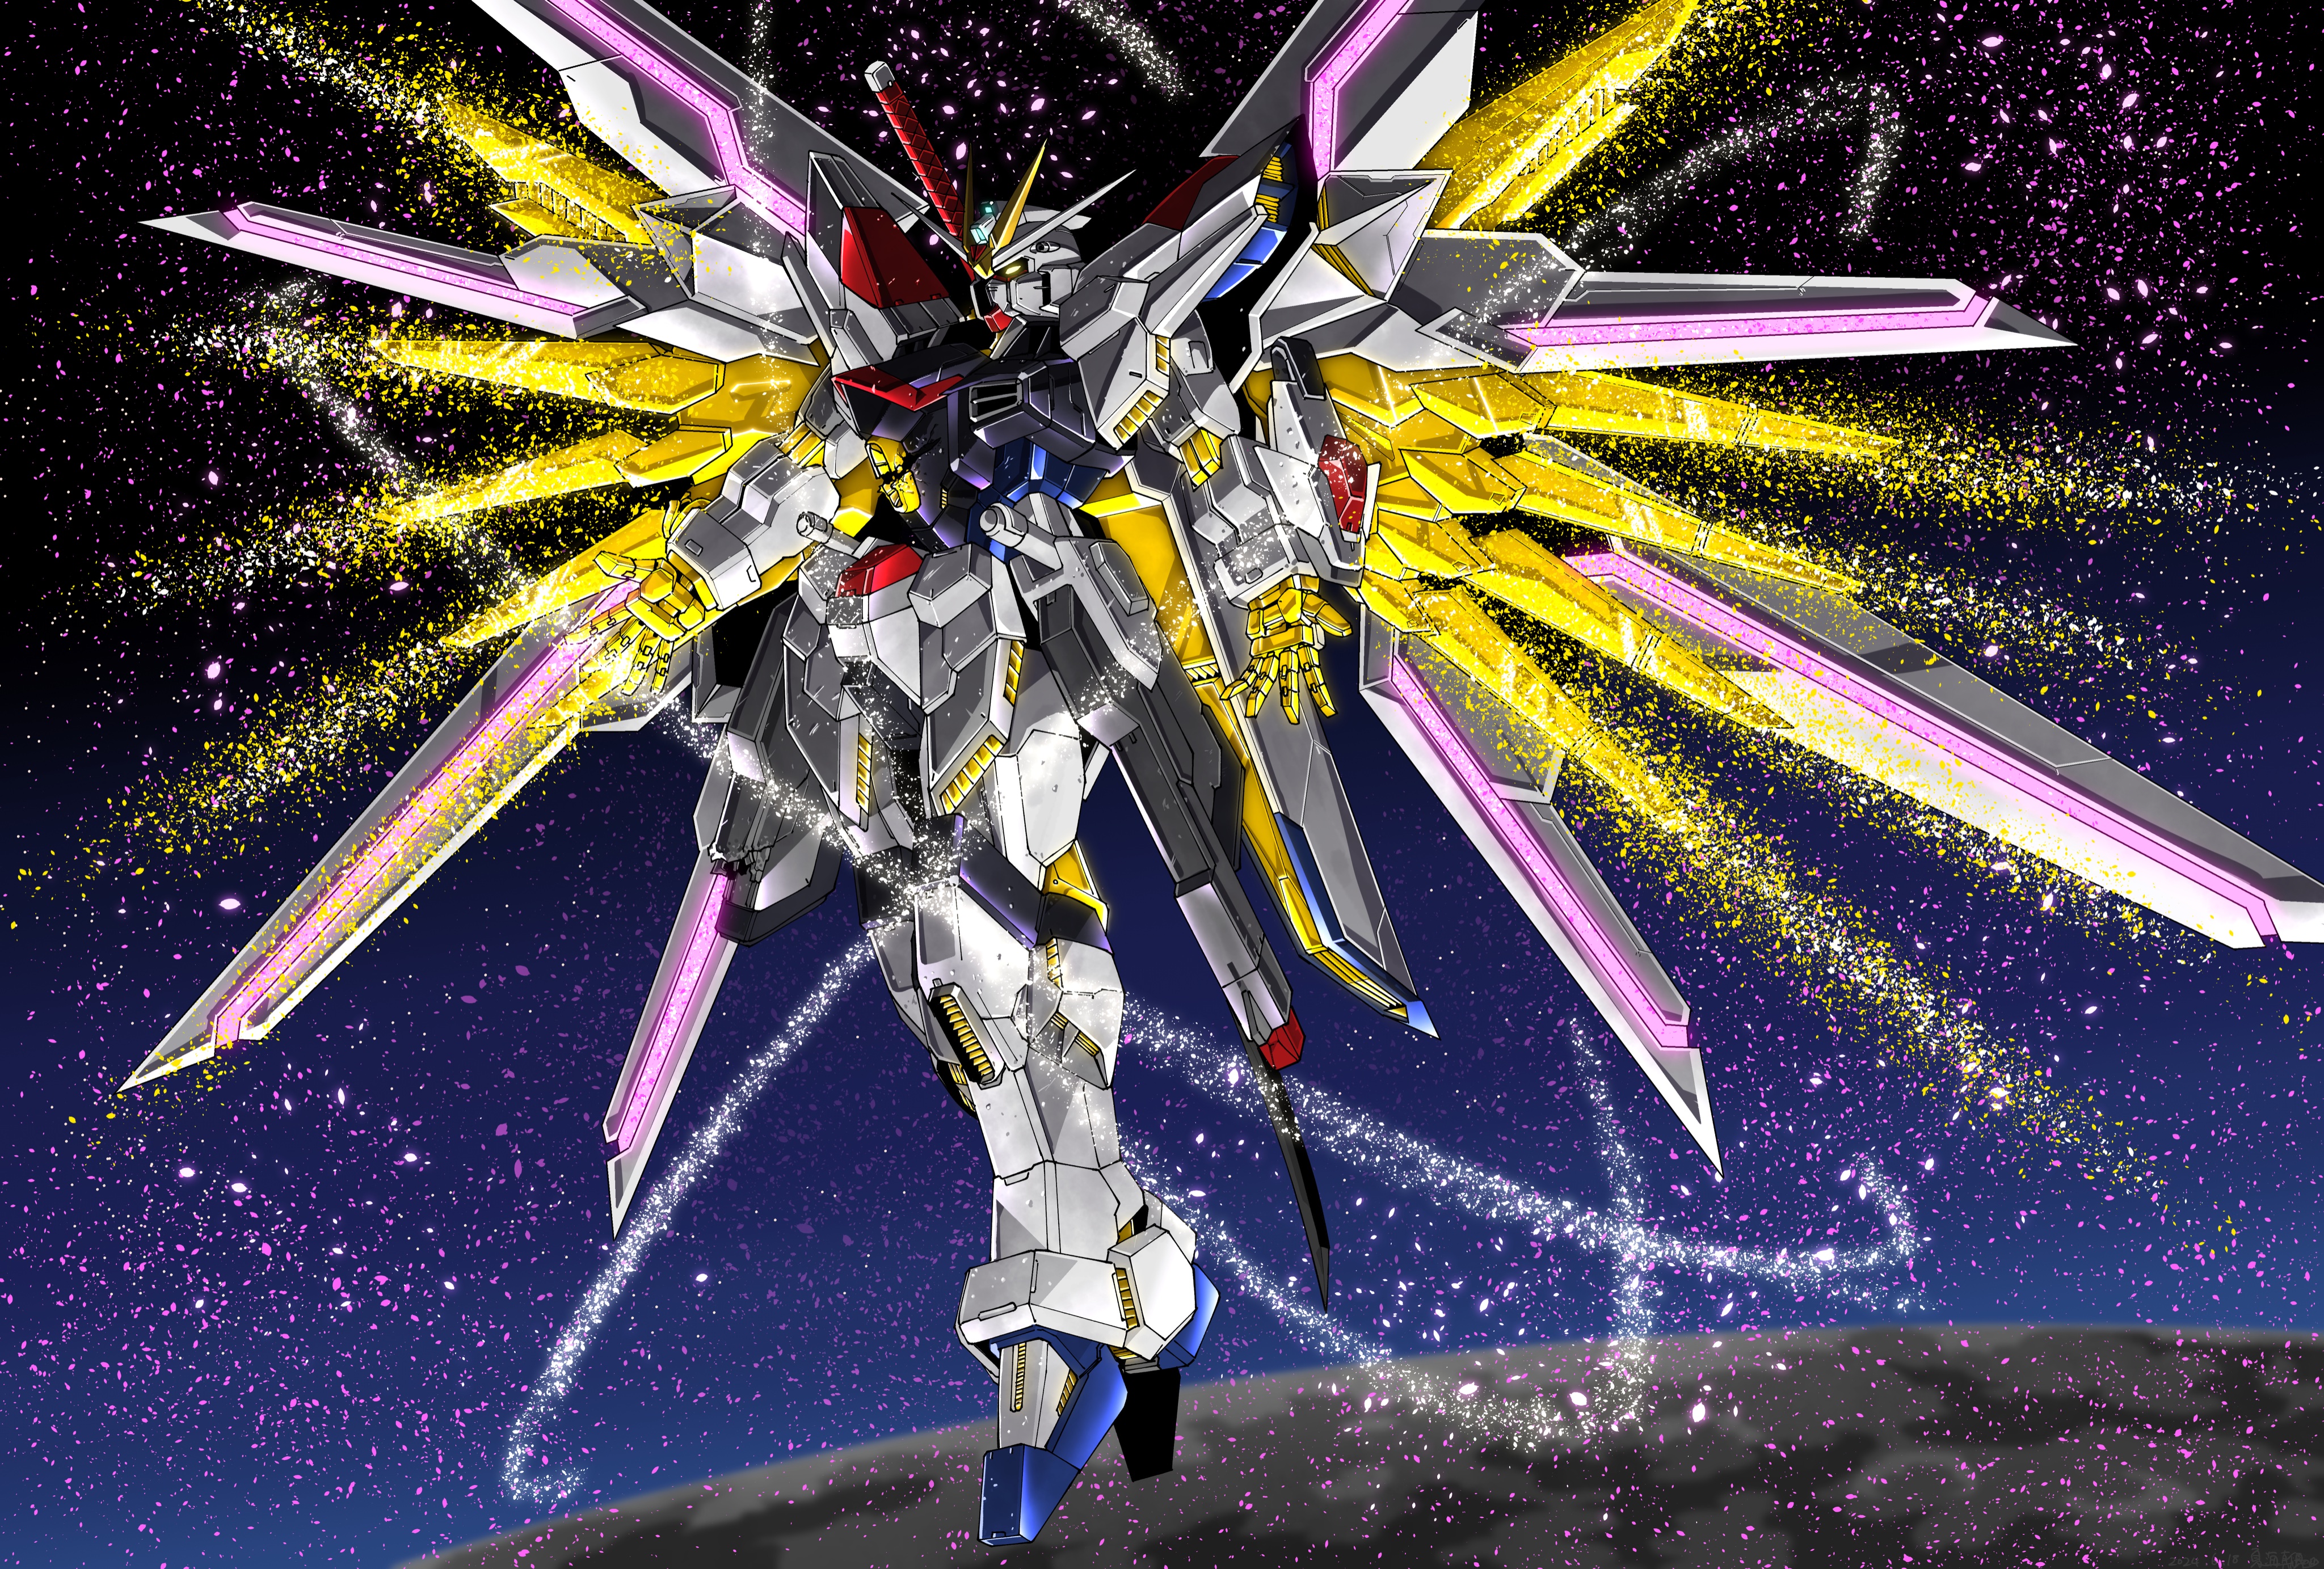 Anime 4096x2766 anime mechs Super Robot Taisen Mobile Suit Gundam SEED FREEDOM Mighty Strike Freedom Gundam artwork digital art fan art Mobile Suit Gundam Gundam